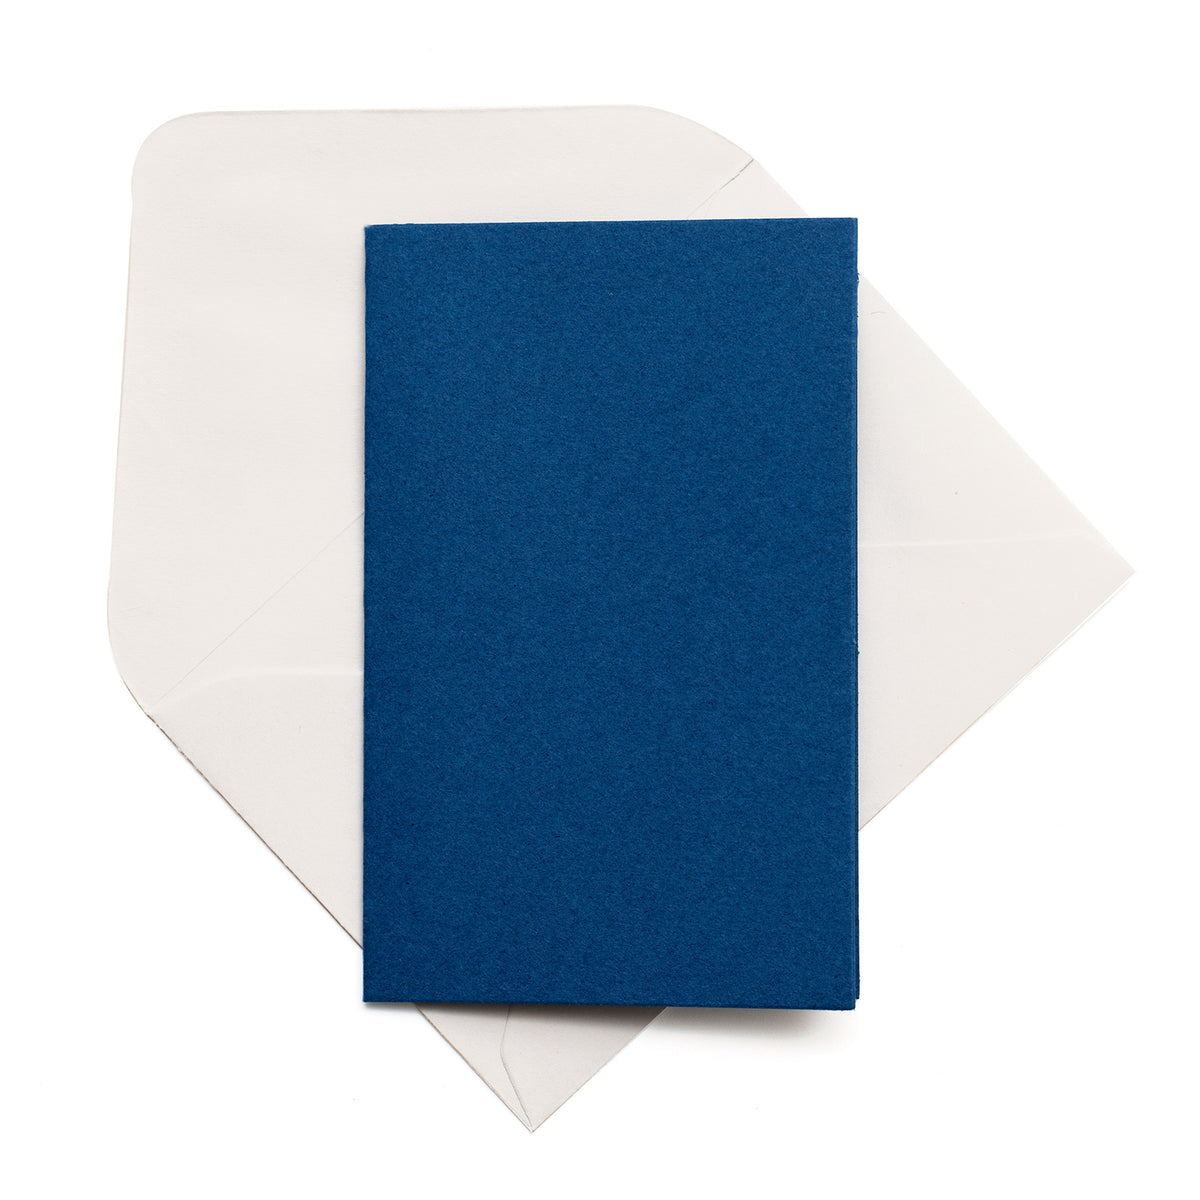 Bazzill 2.25x3.5 mini folded cards and envelopes - 8 pk